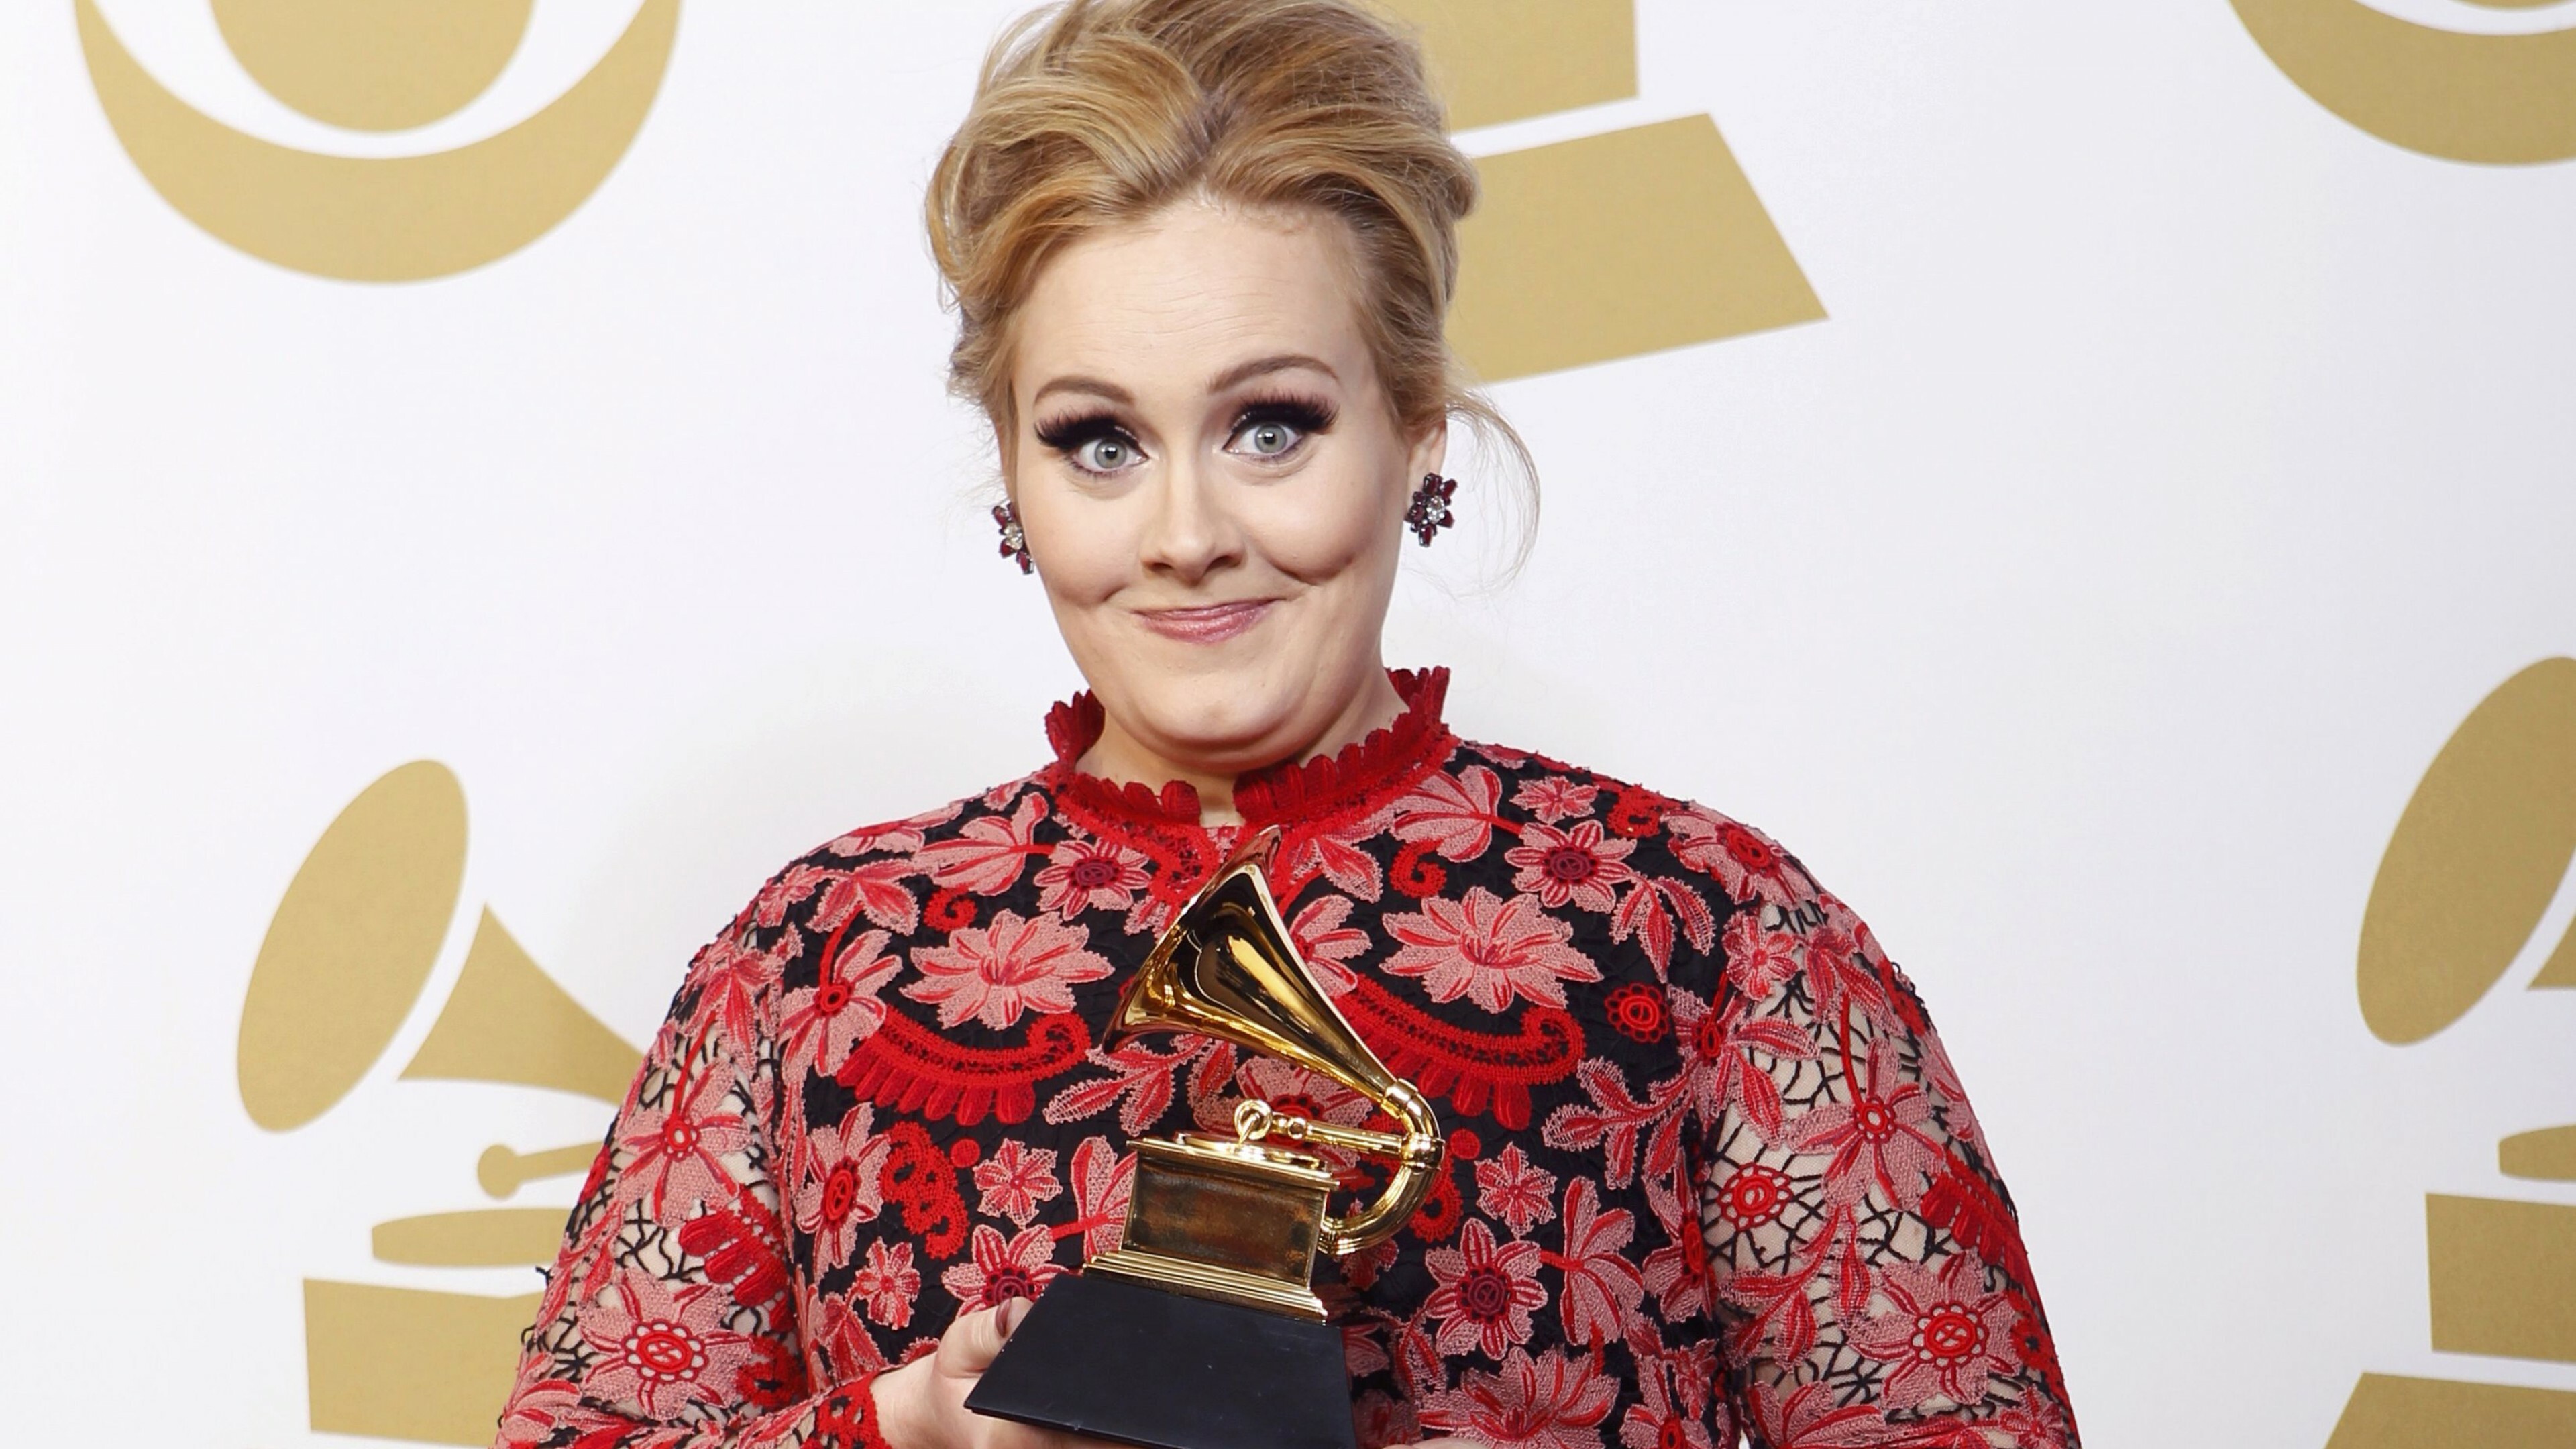 Adele: Adele Laurie Blue Adkins, Grammys 2015, Celebrity. 3840x2160 4K Wallpaper.